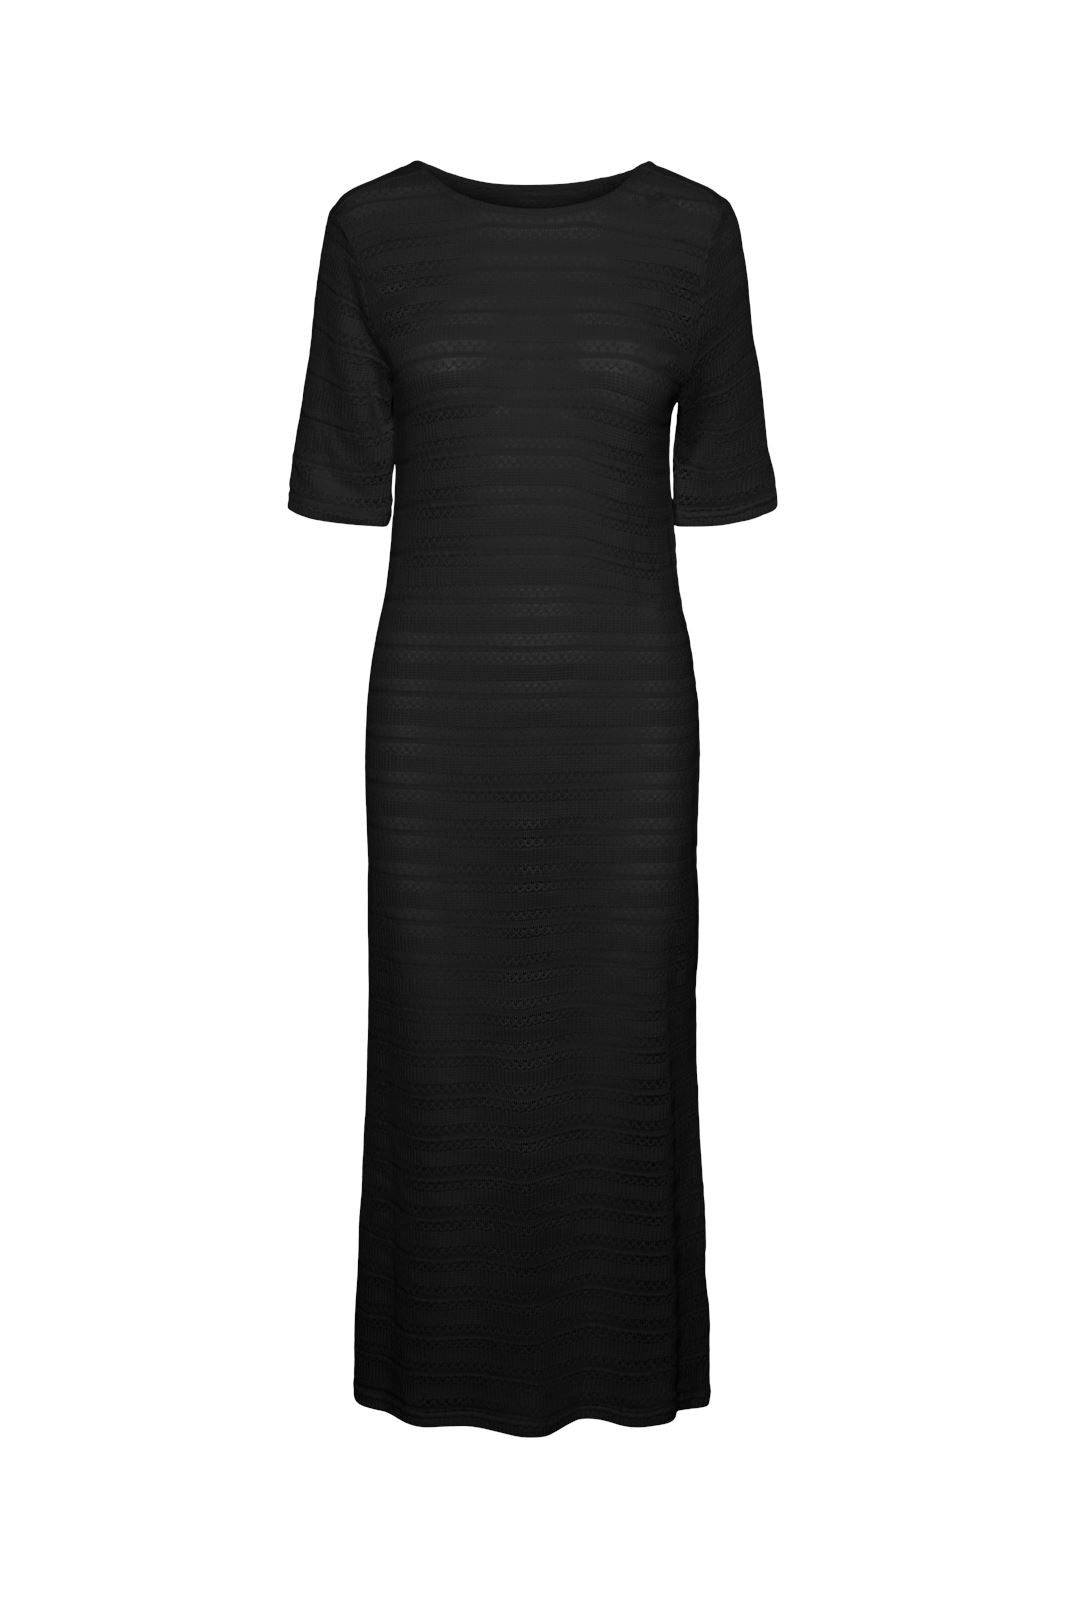 Pieces - Pcagda Ss Dress - 4584004 Black